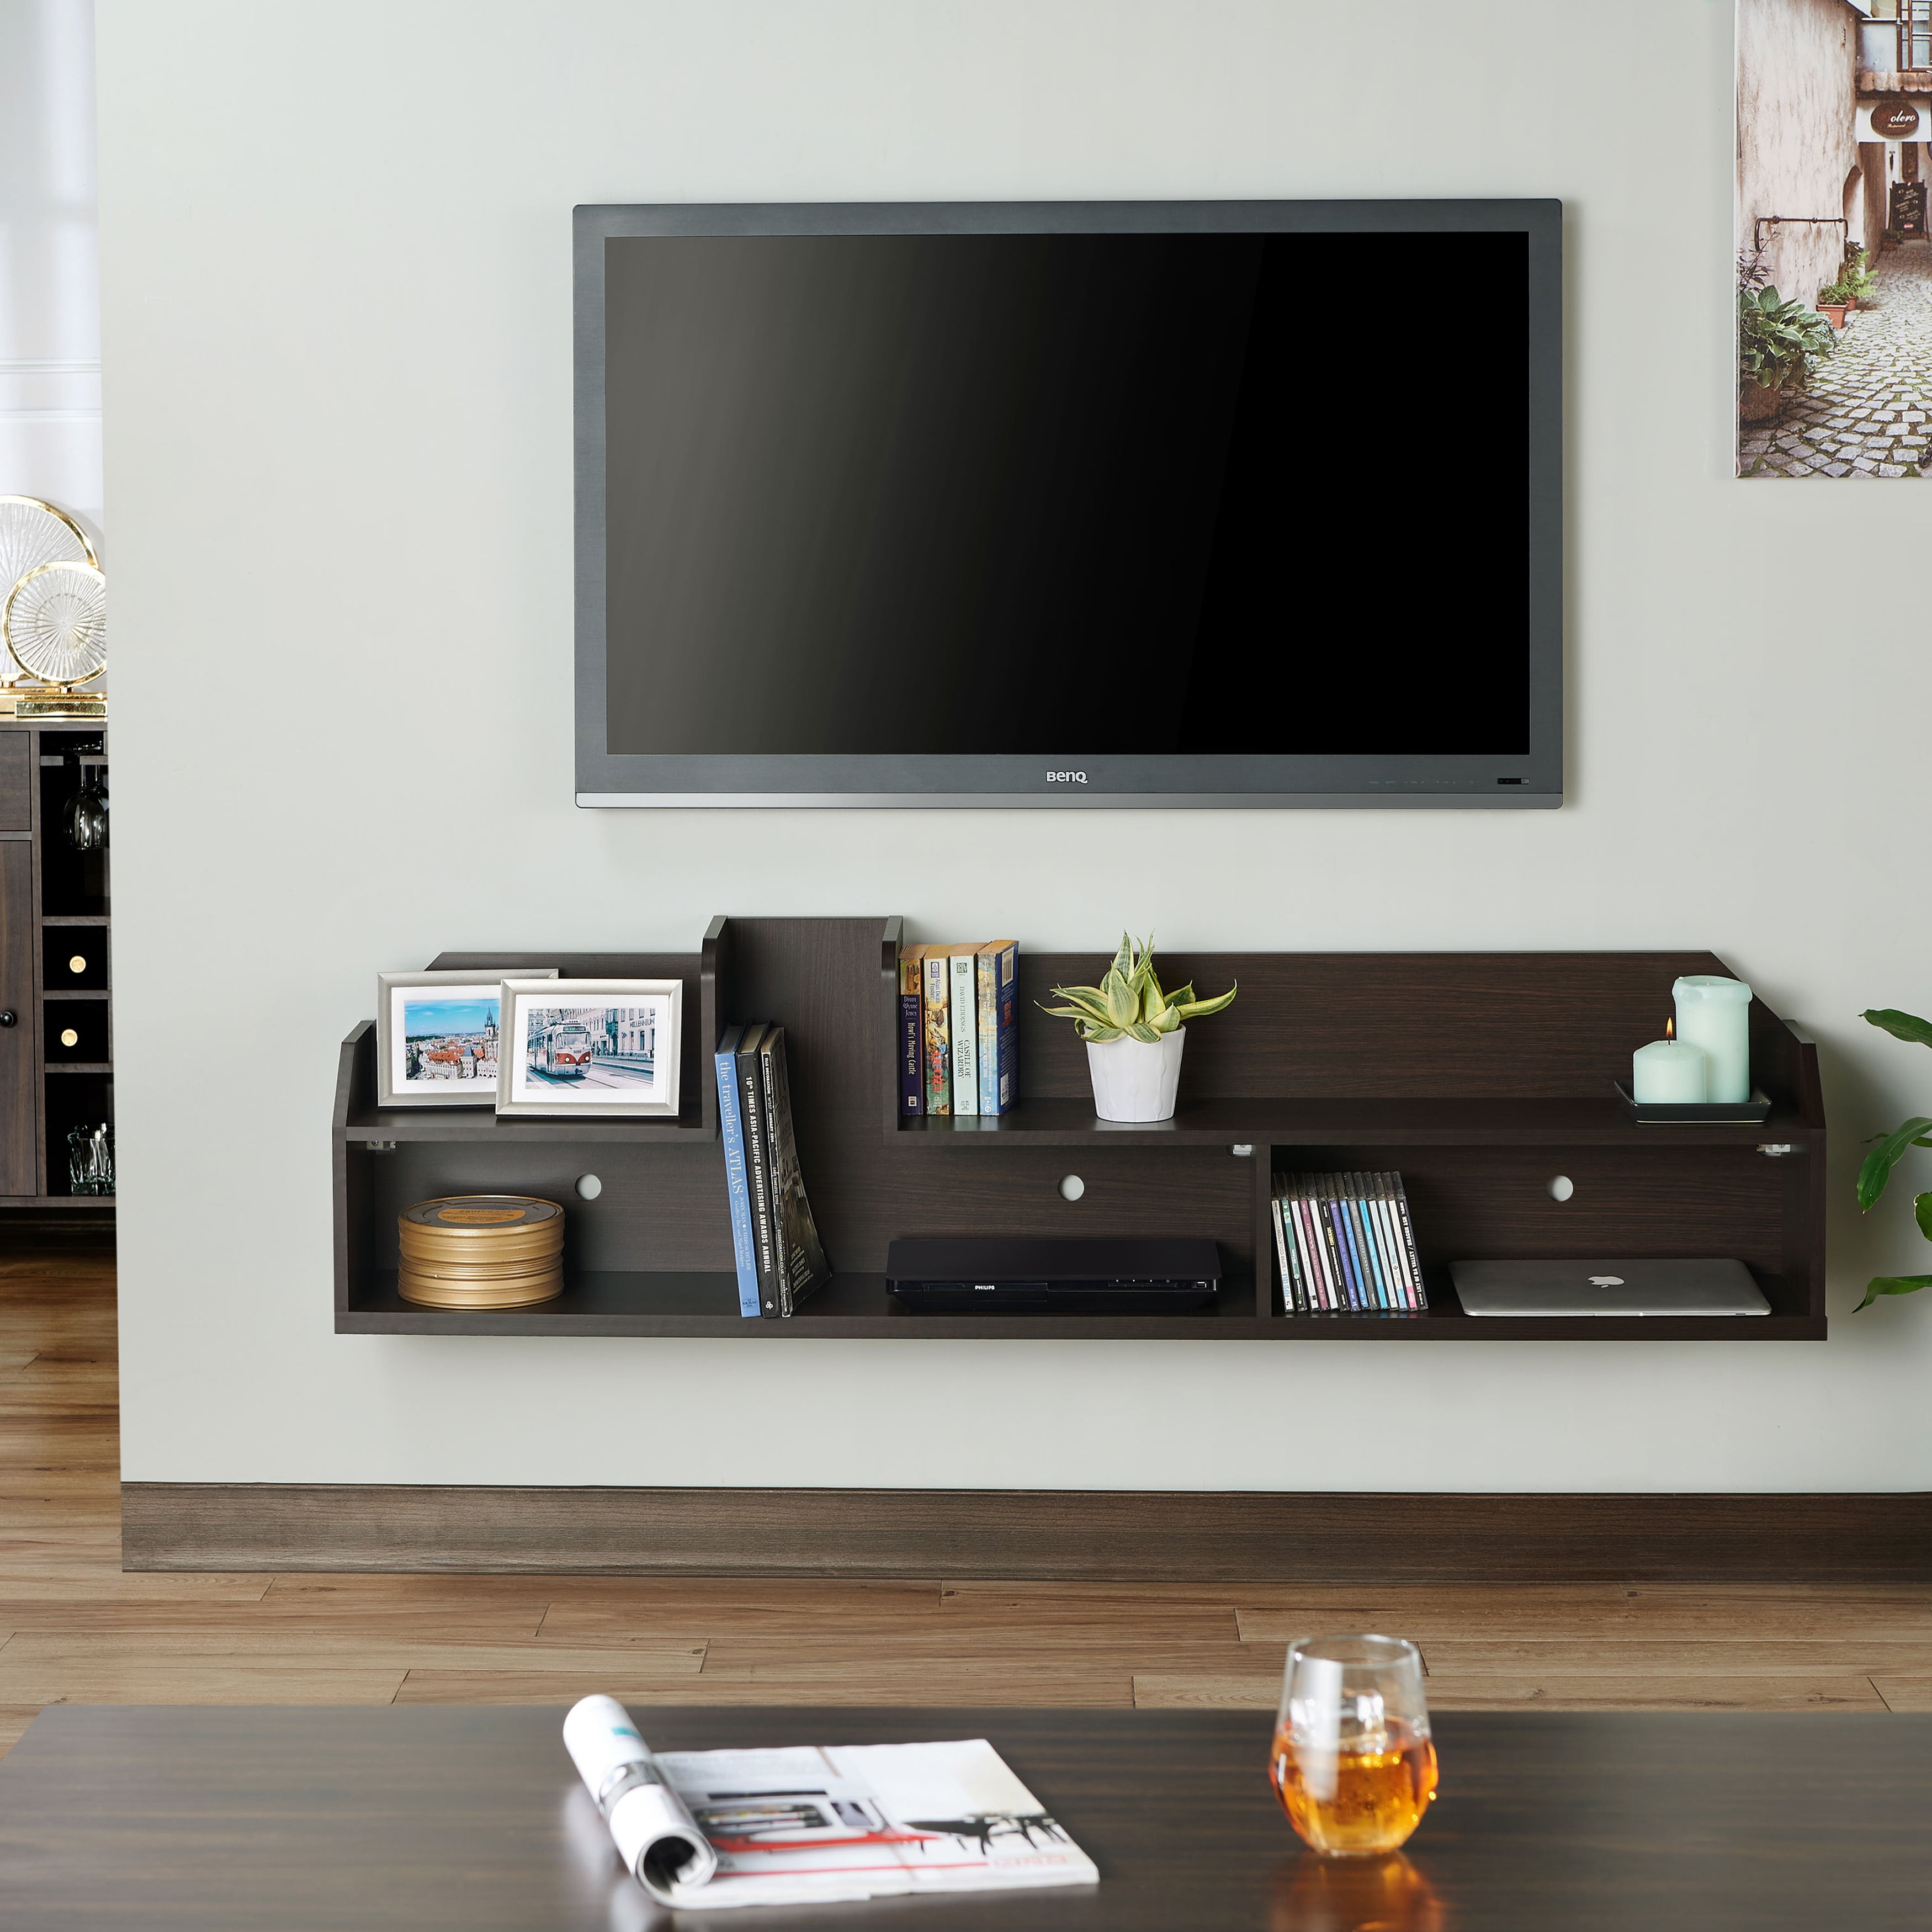 Materialisme ost udmelding Furniture of America Alex Modern Wall Mount TV Stand, 63", Walnut -  Walmart.com